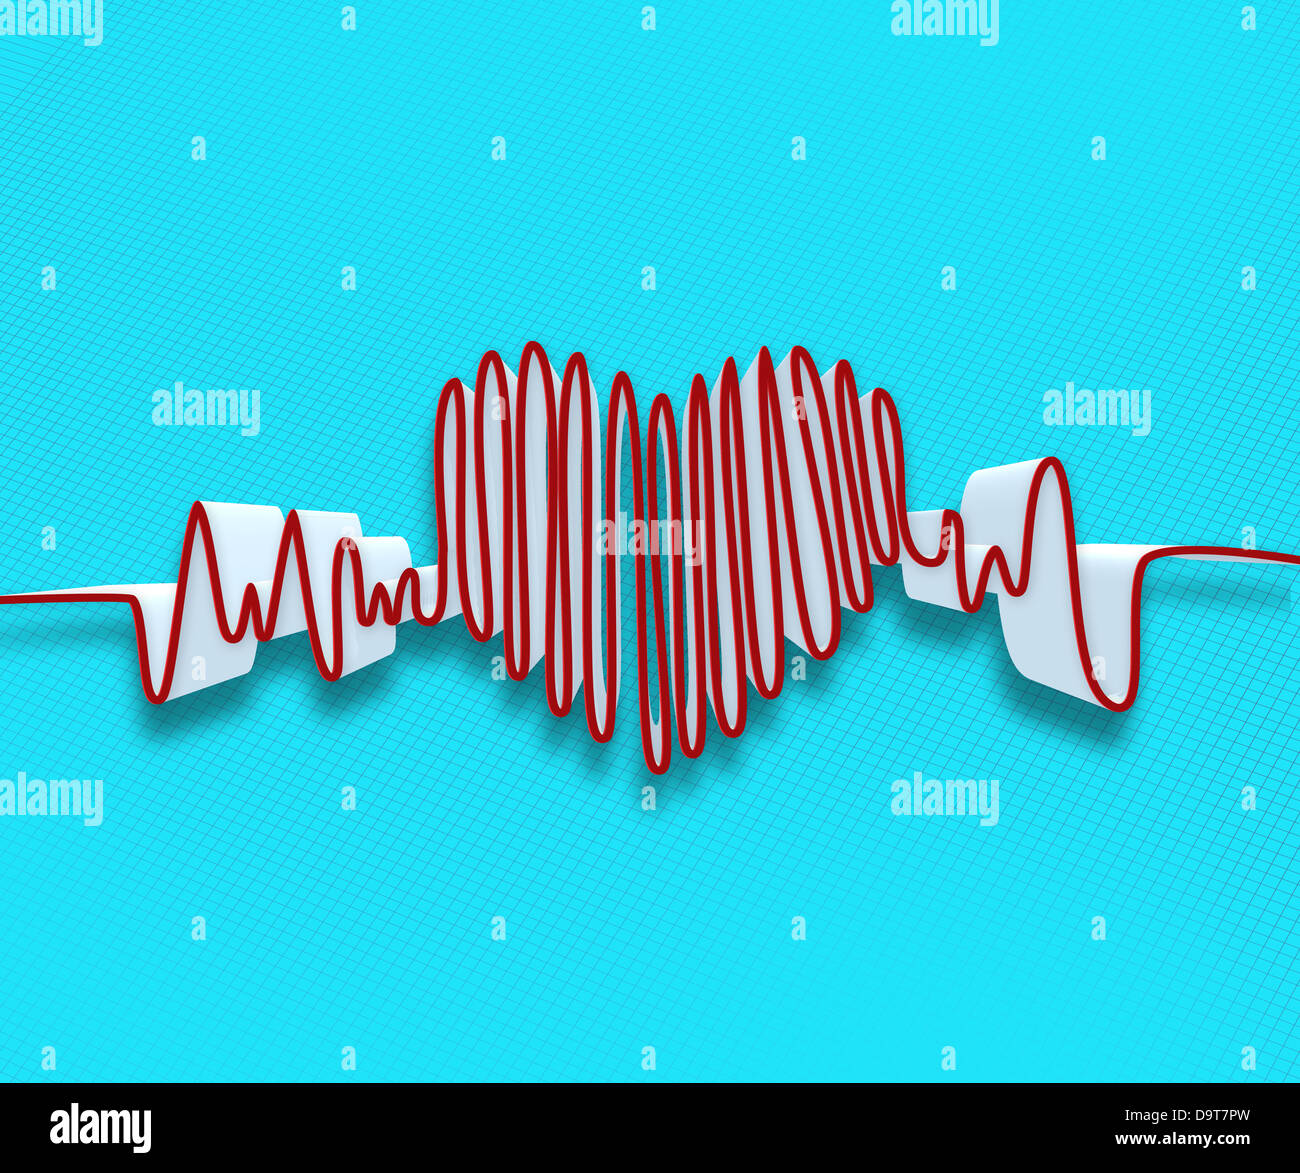 Drawn heart beat line Stock Photo